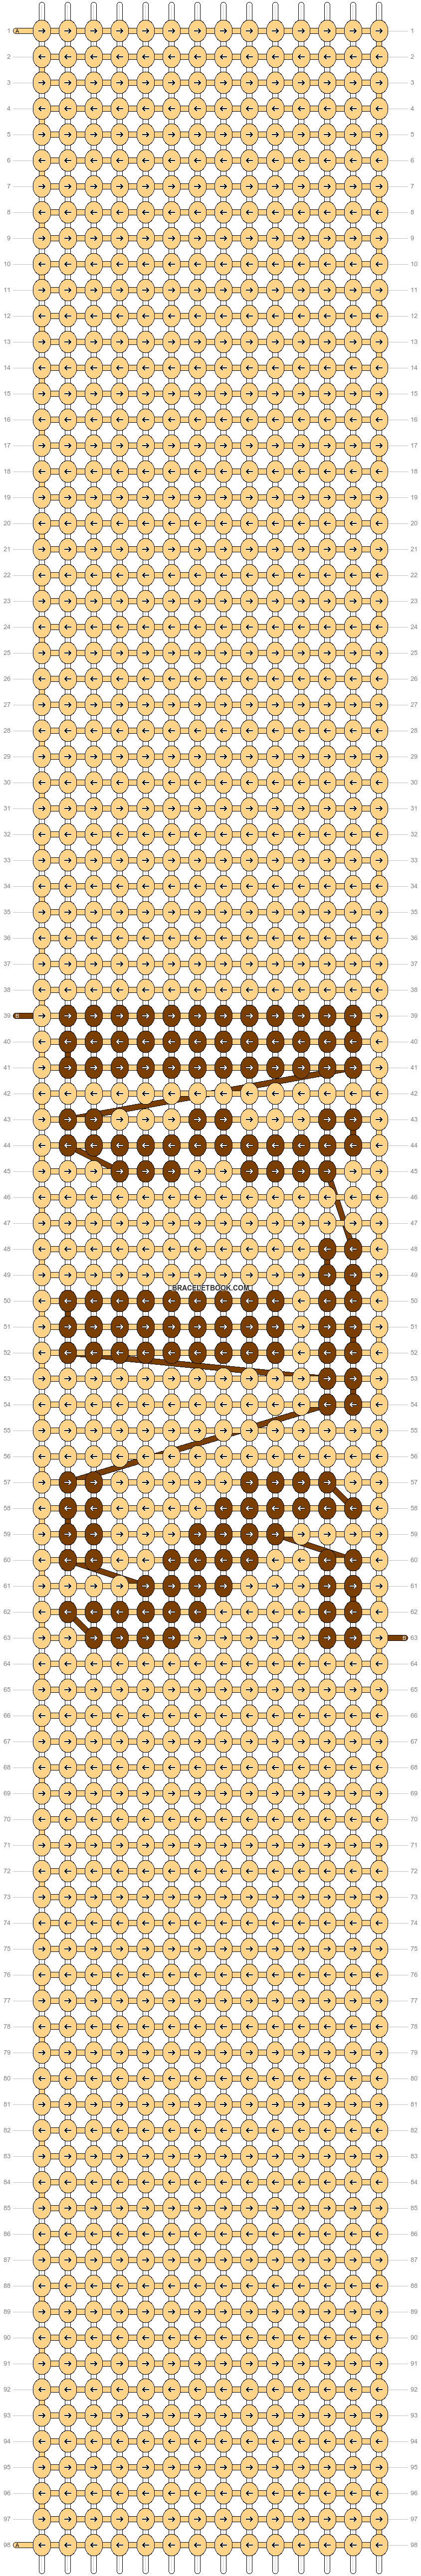 Alpha pattern #21589 variation #17106 pattern